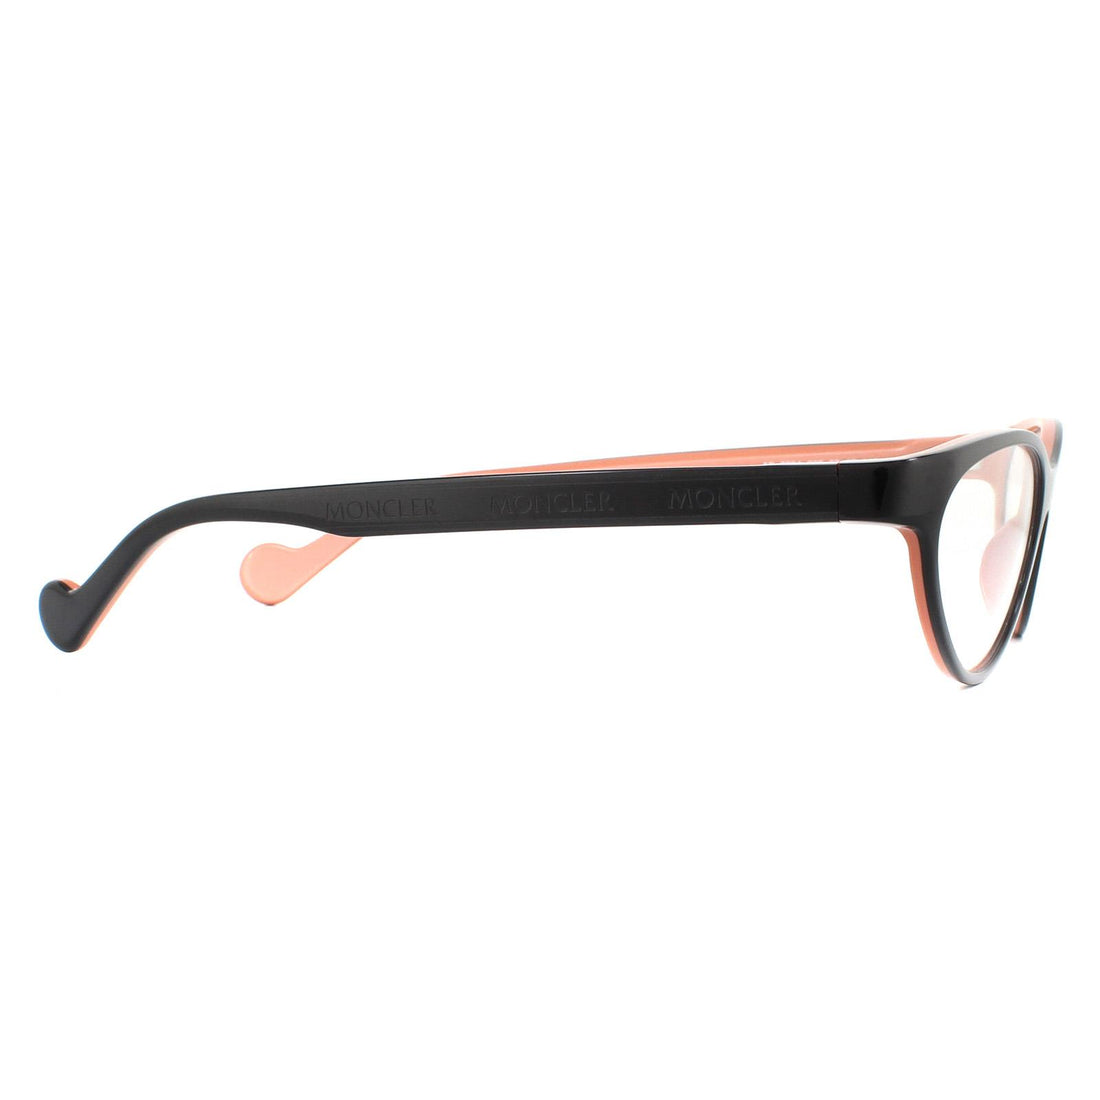 Moncler Glasses Frames ML5064 005 Black and Pink Women